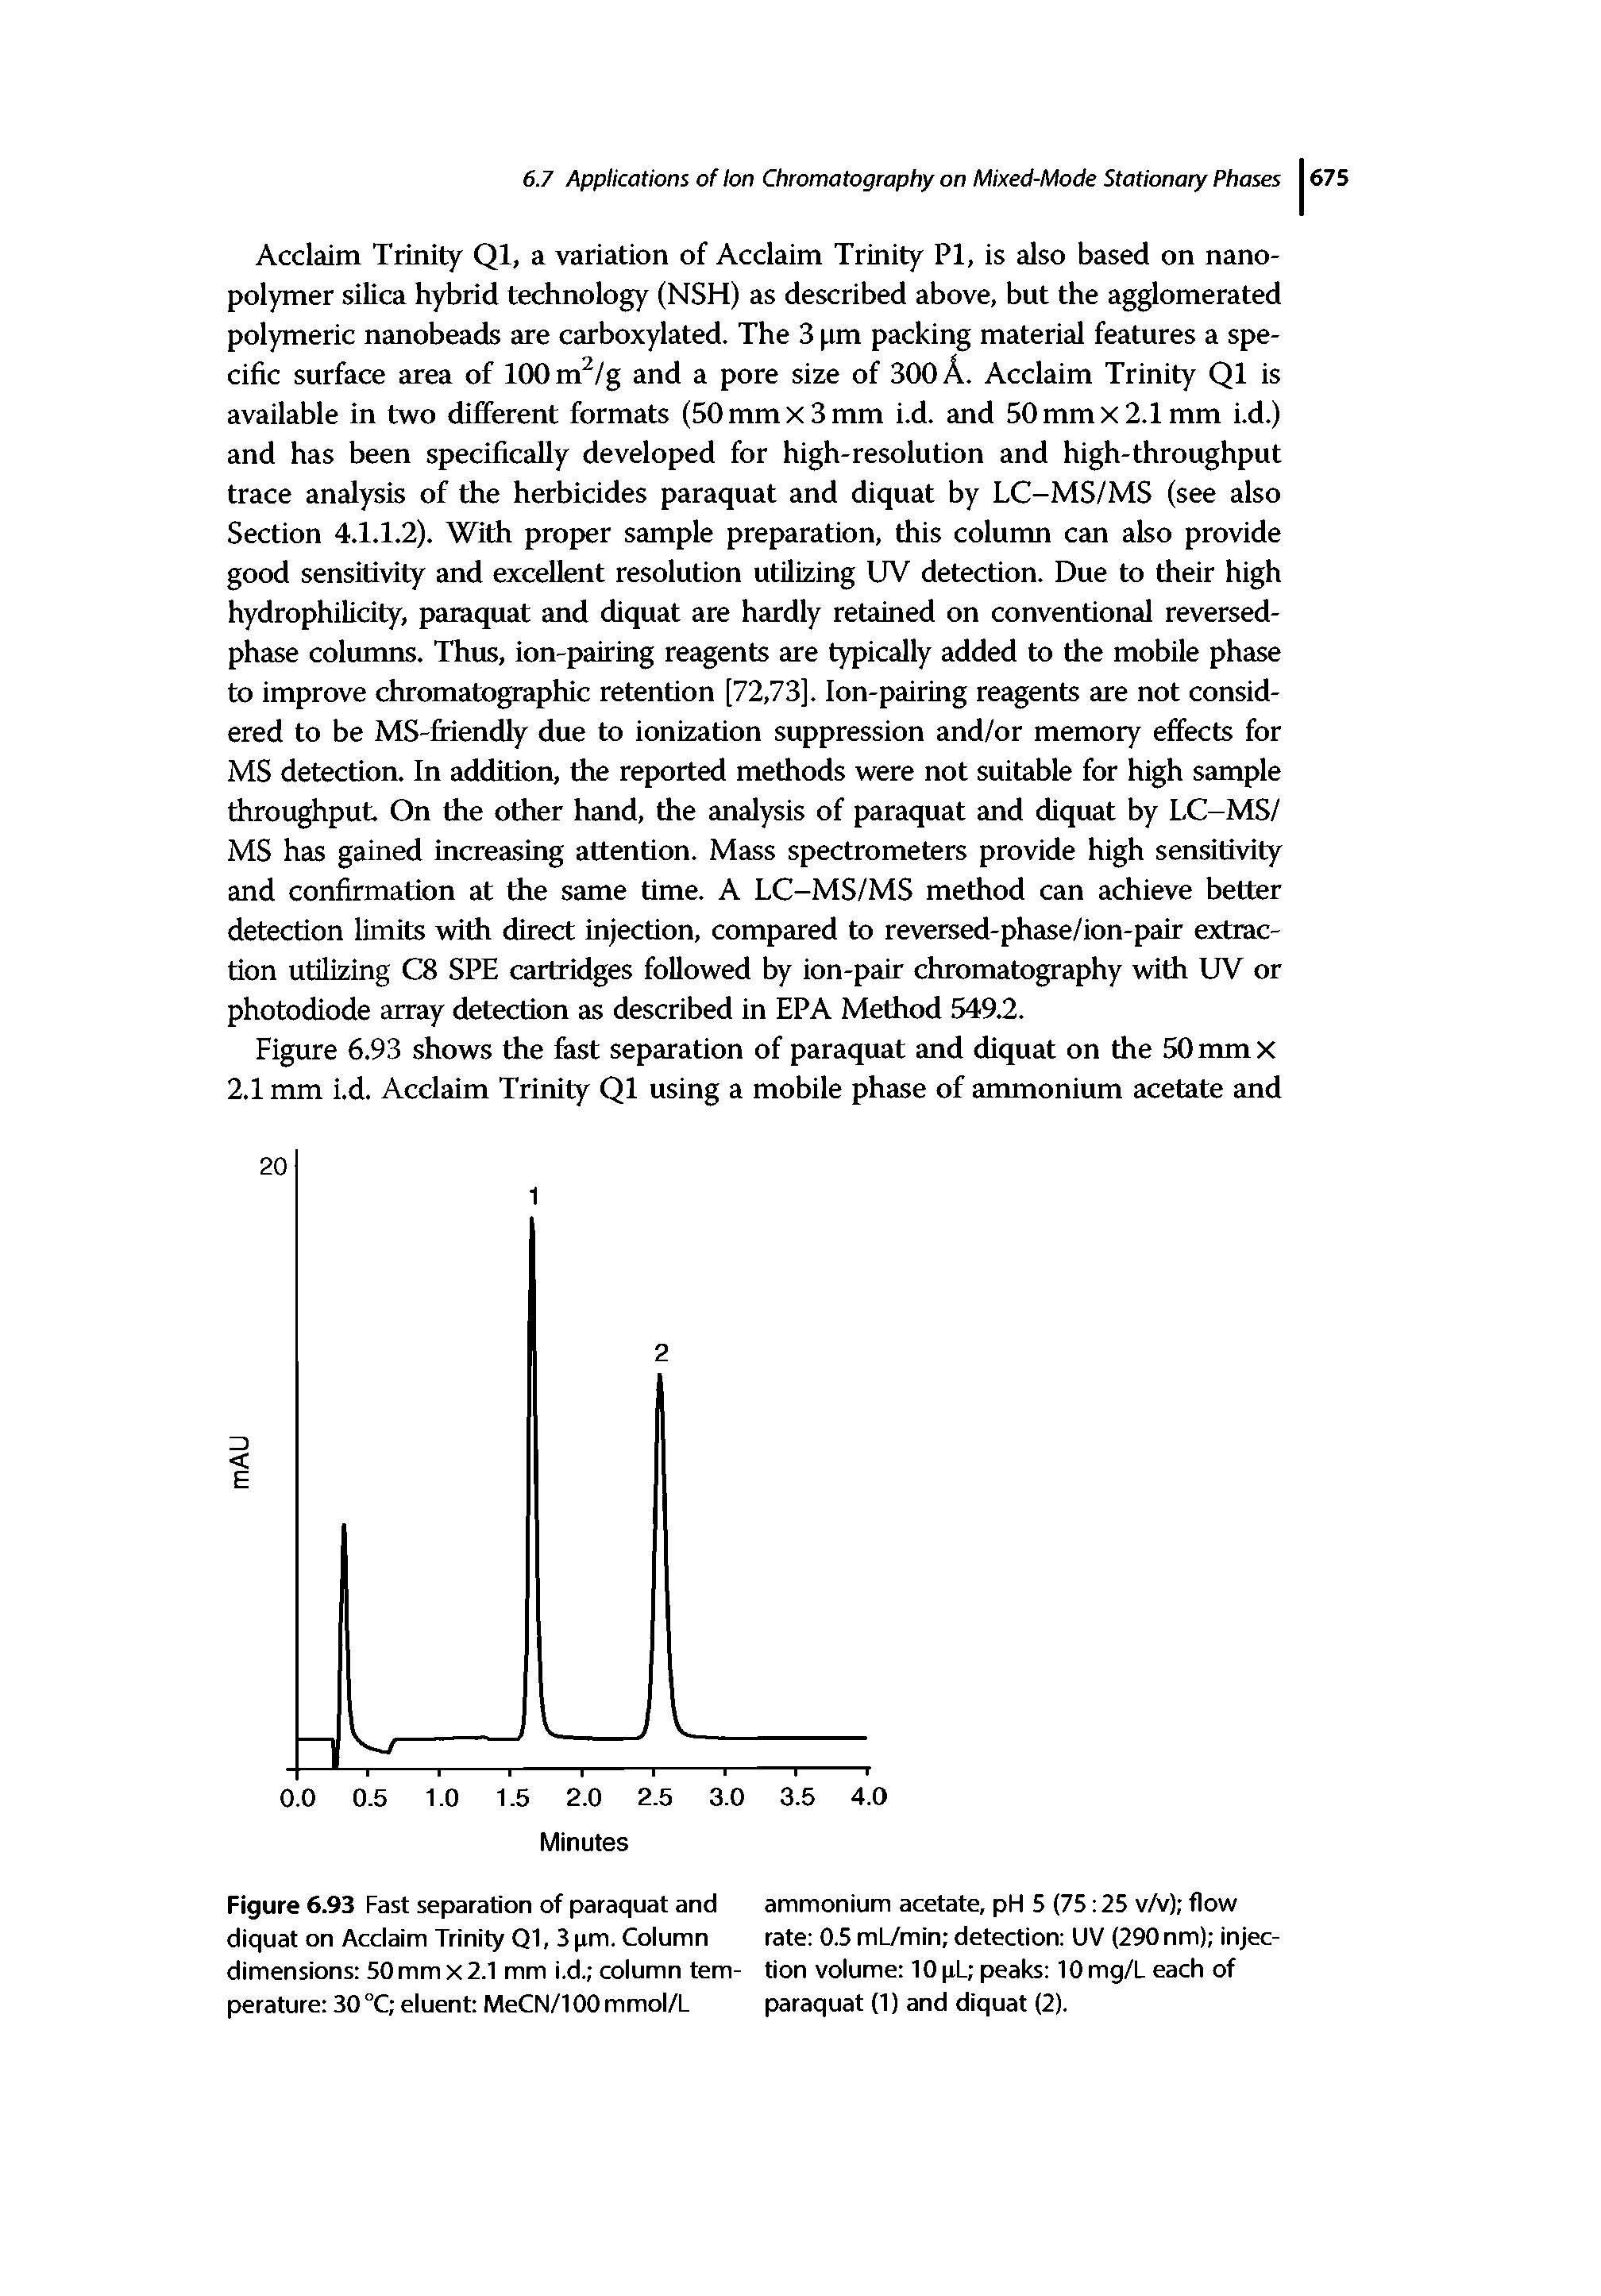 Figure 6.93 Fast separation of paraquat and ammonium acetate, pH 5 (75 25 v/v) flow diquat on Acclaim Trinity Ql, 3 pm. Column rate 0.5 mtymin detection UV (290 nm) injec-dimensions 50 mm x 2.1 mm i.d. column tern- tion volume 10 pL peaks 10 mg/L each of perature 30 °C eluent MeCN/100 mmol/L paraquat (1) and diquat (2).